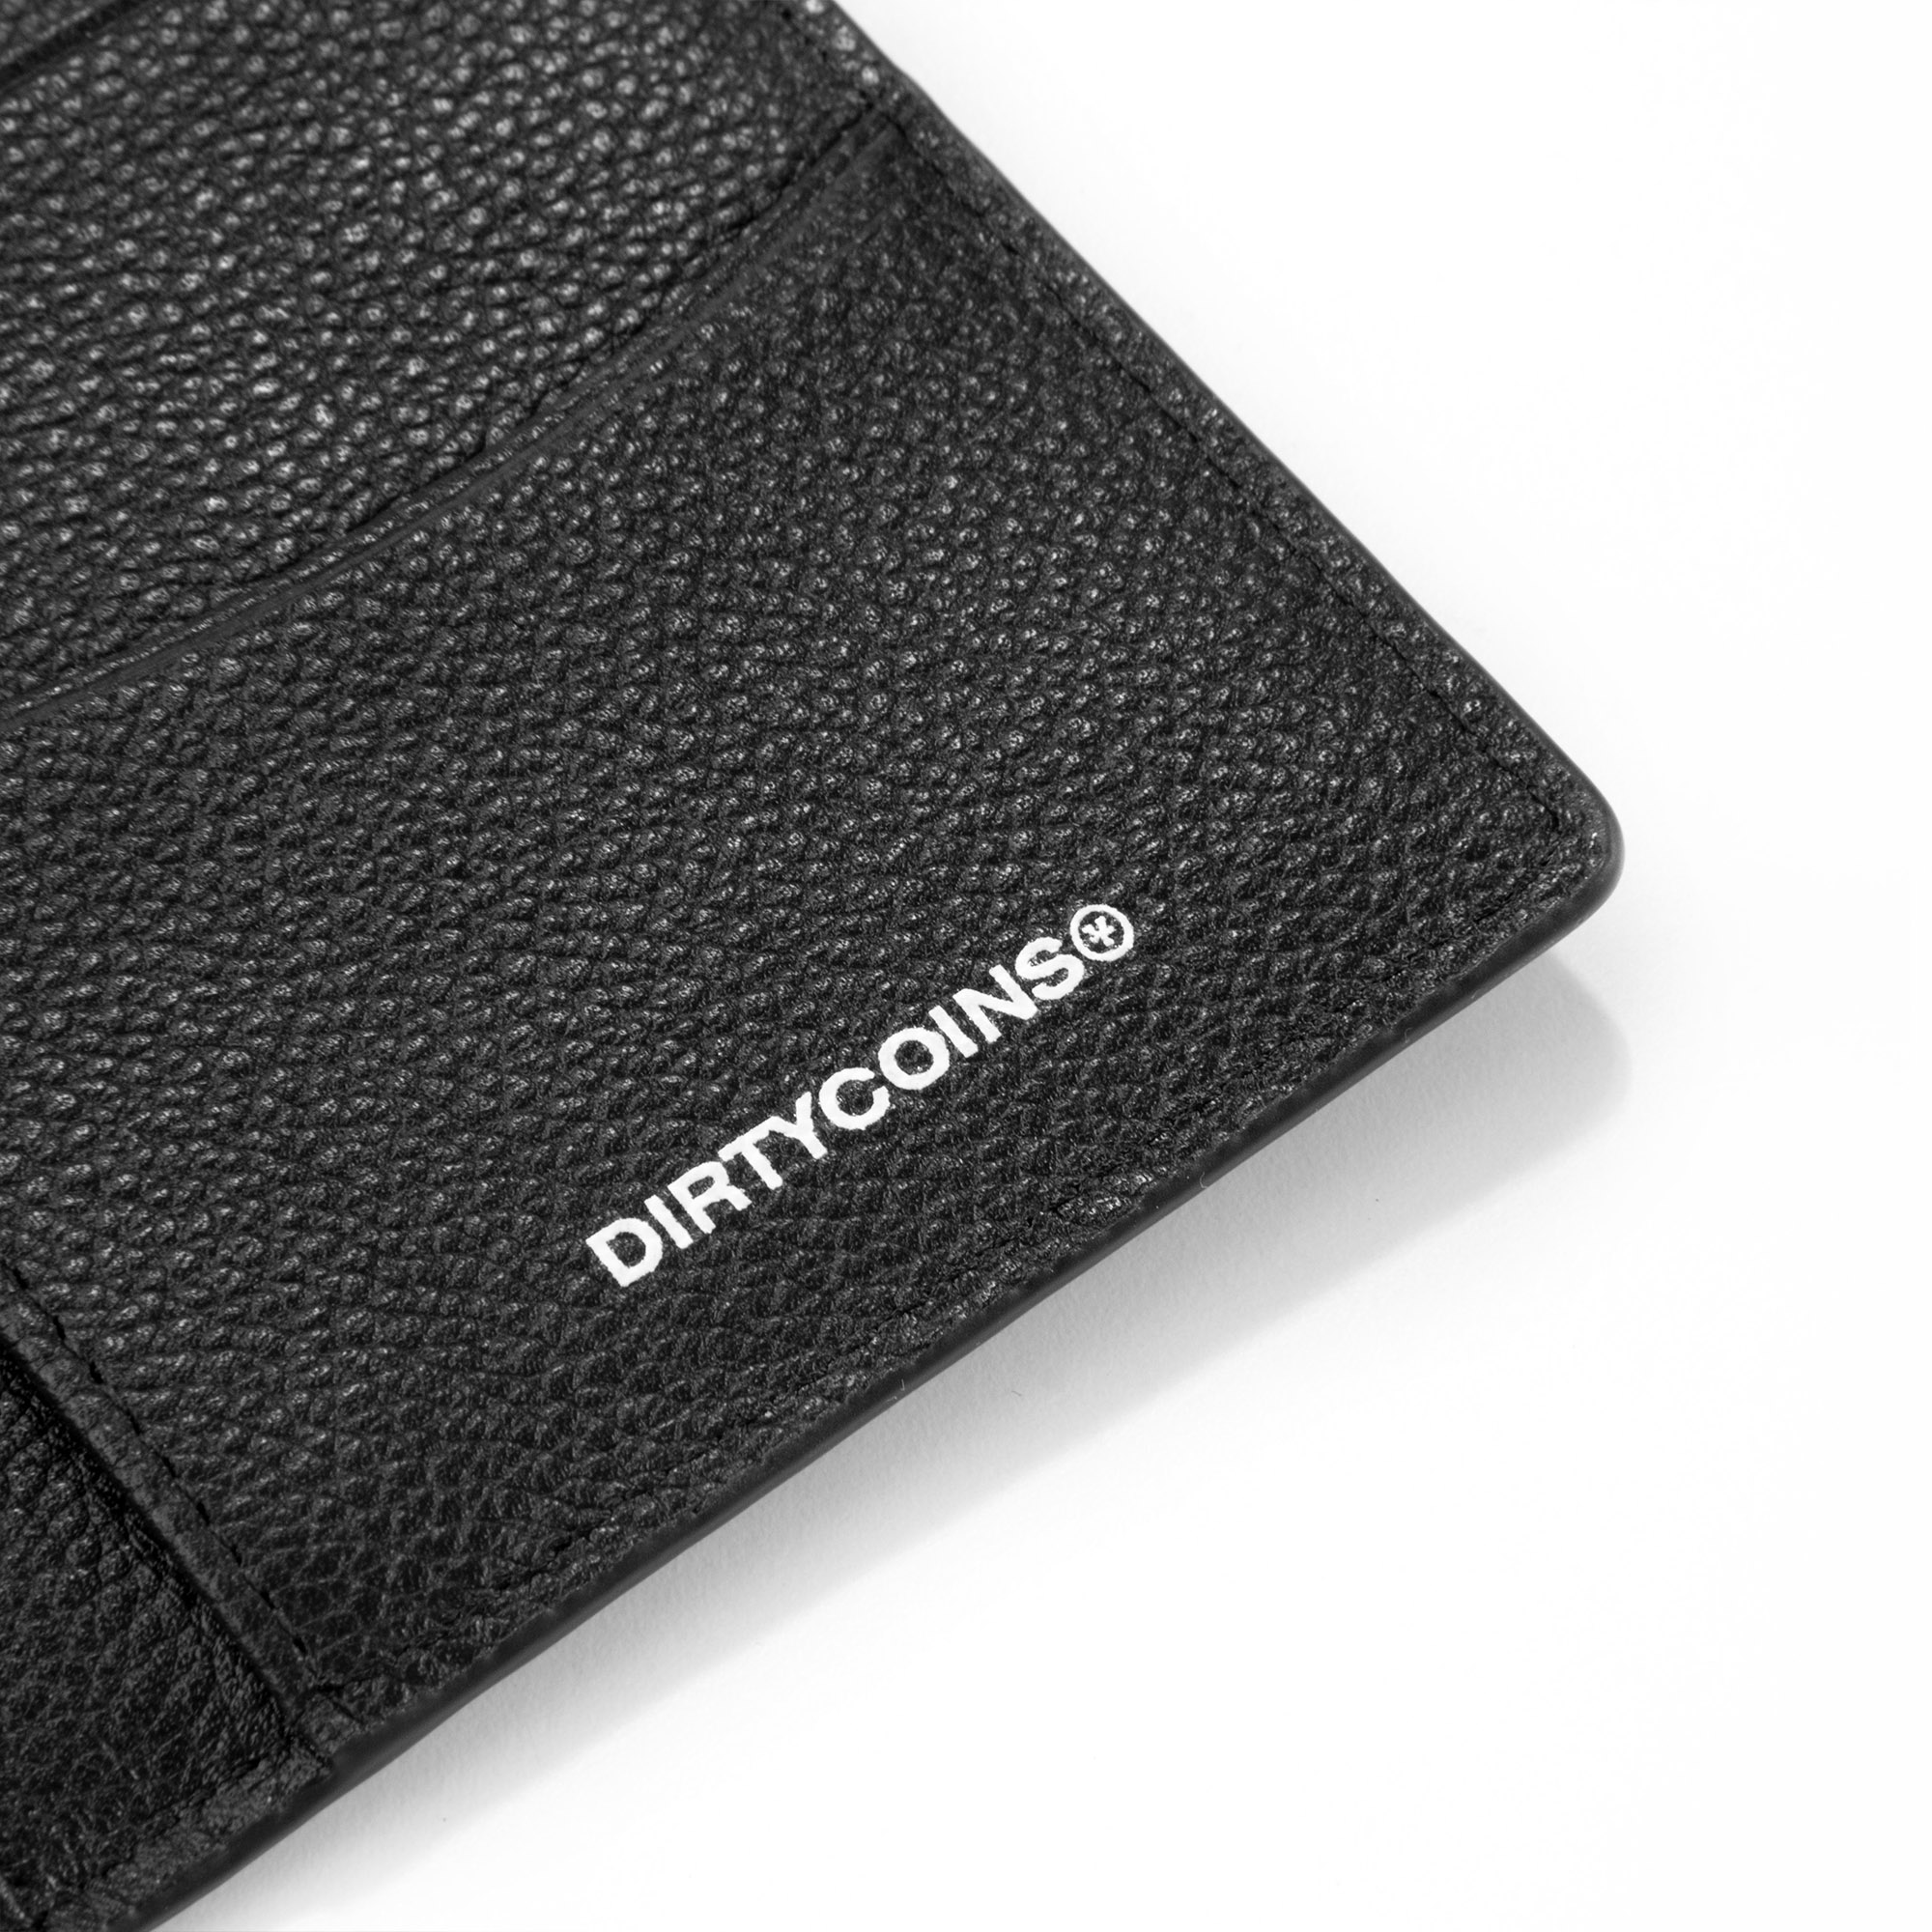 DirtyCoins Folding Card Holder